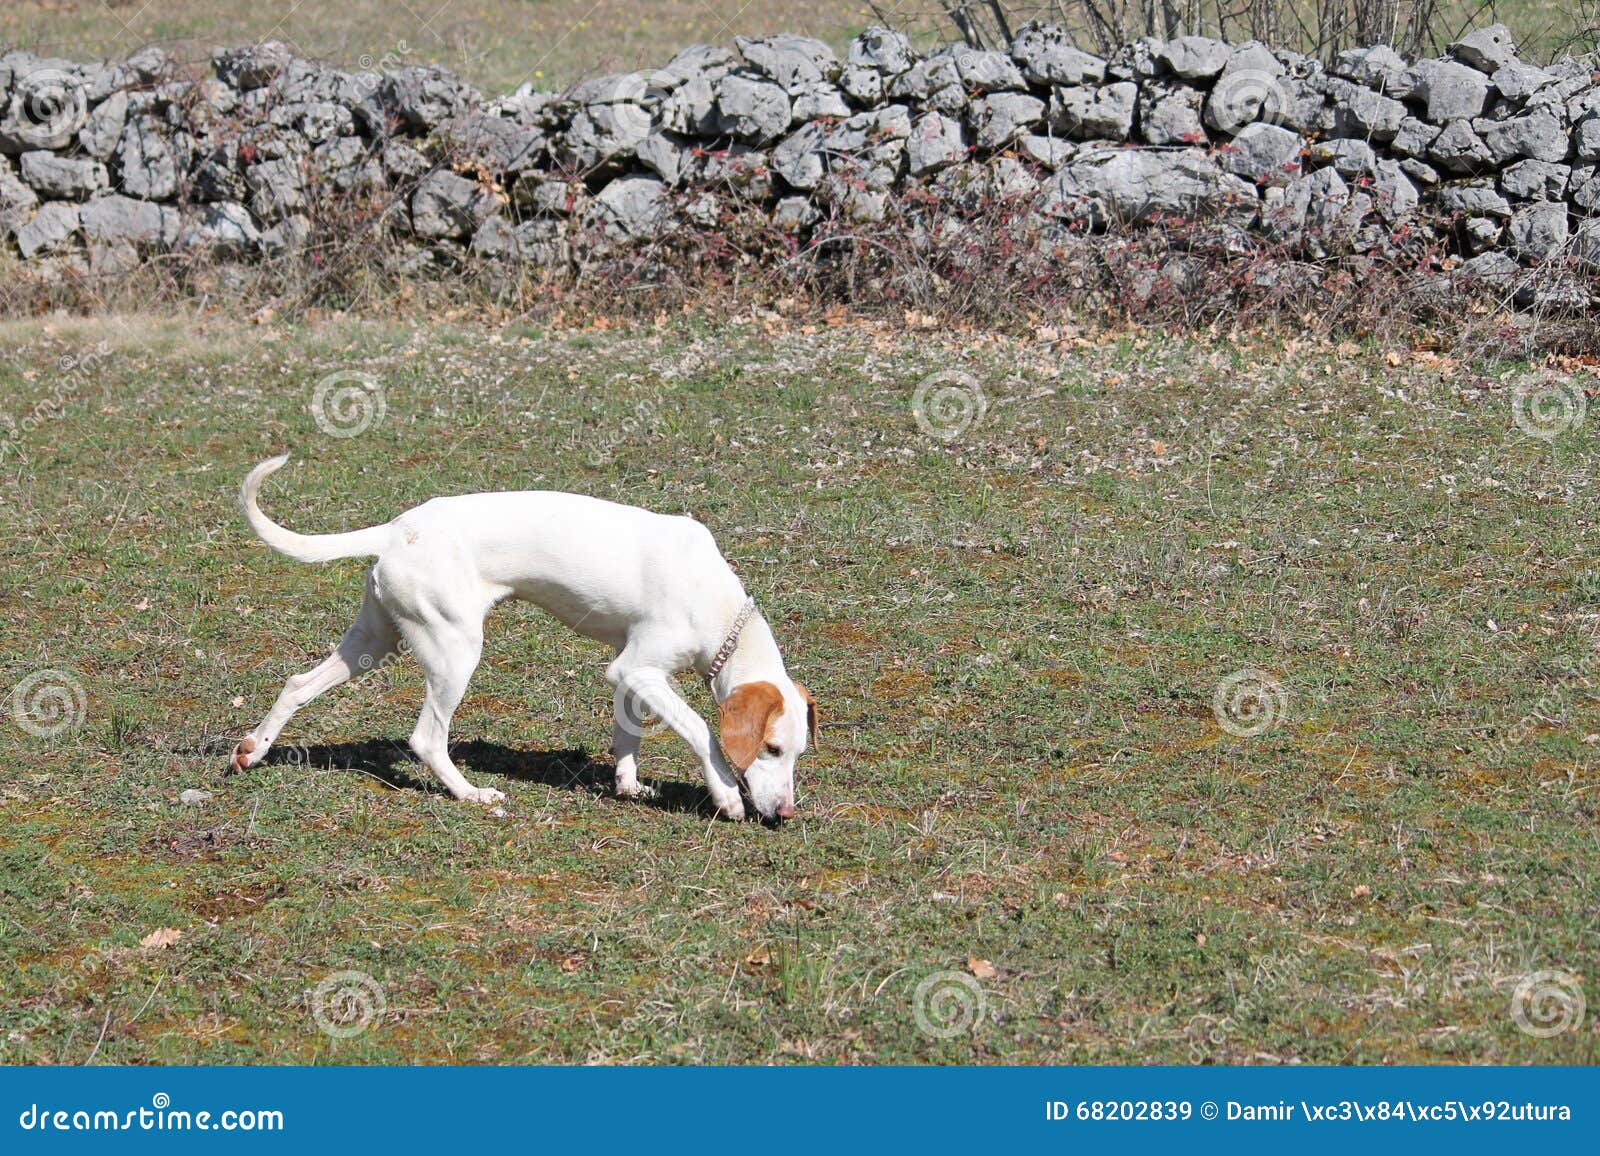 Istrian Shorthaired Hound Hunts Field Mice Stock Photo 68202839 Megapixl